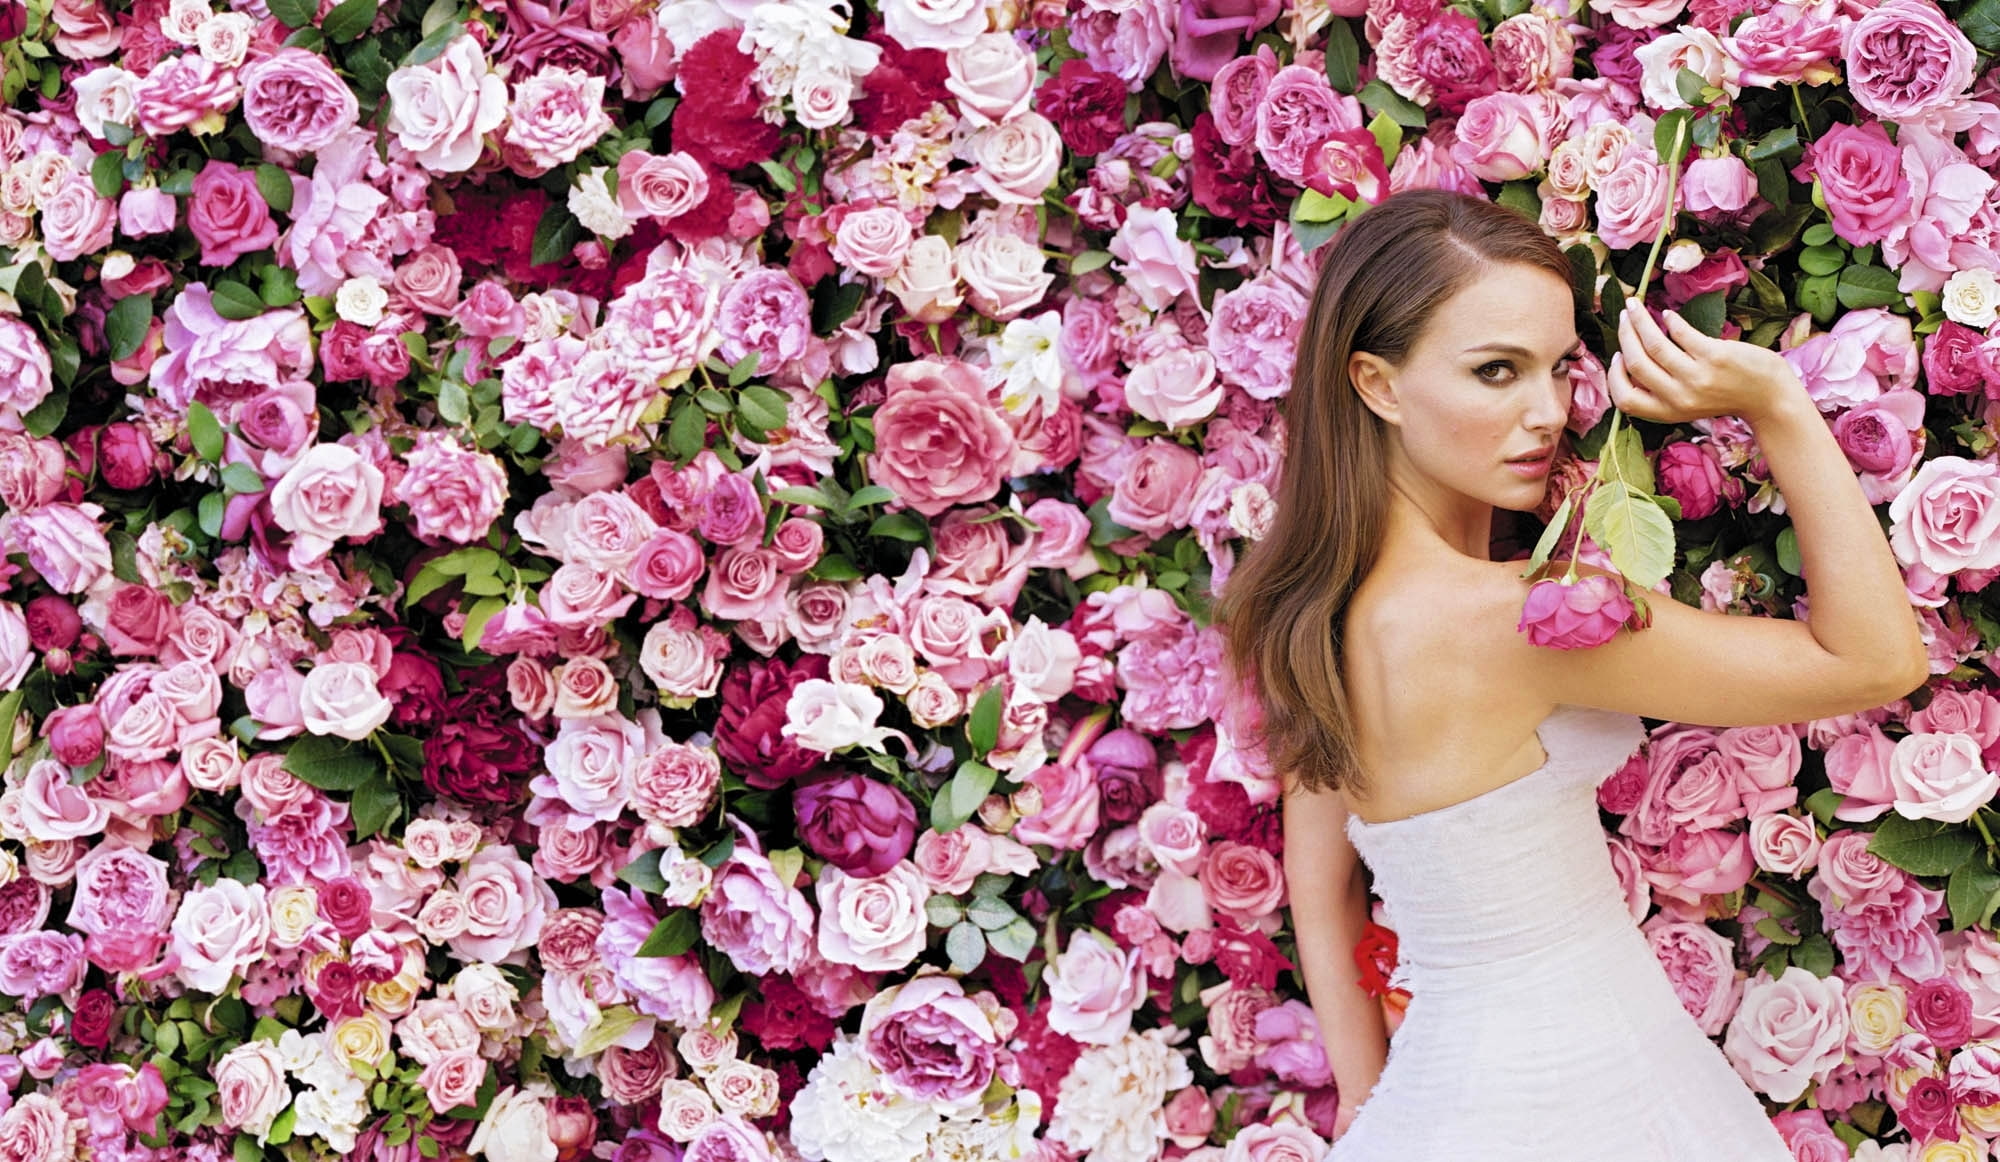 women's white off-shoulder dress, girl, flowers, roses, actress